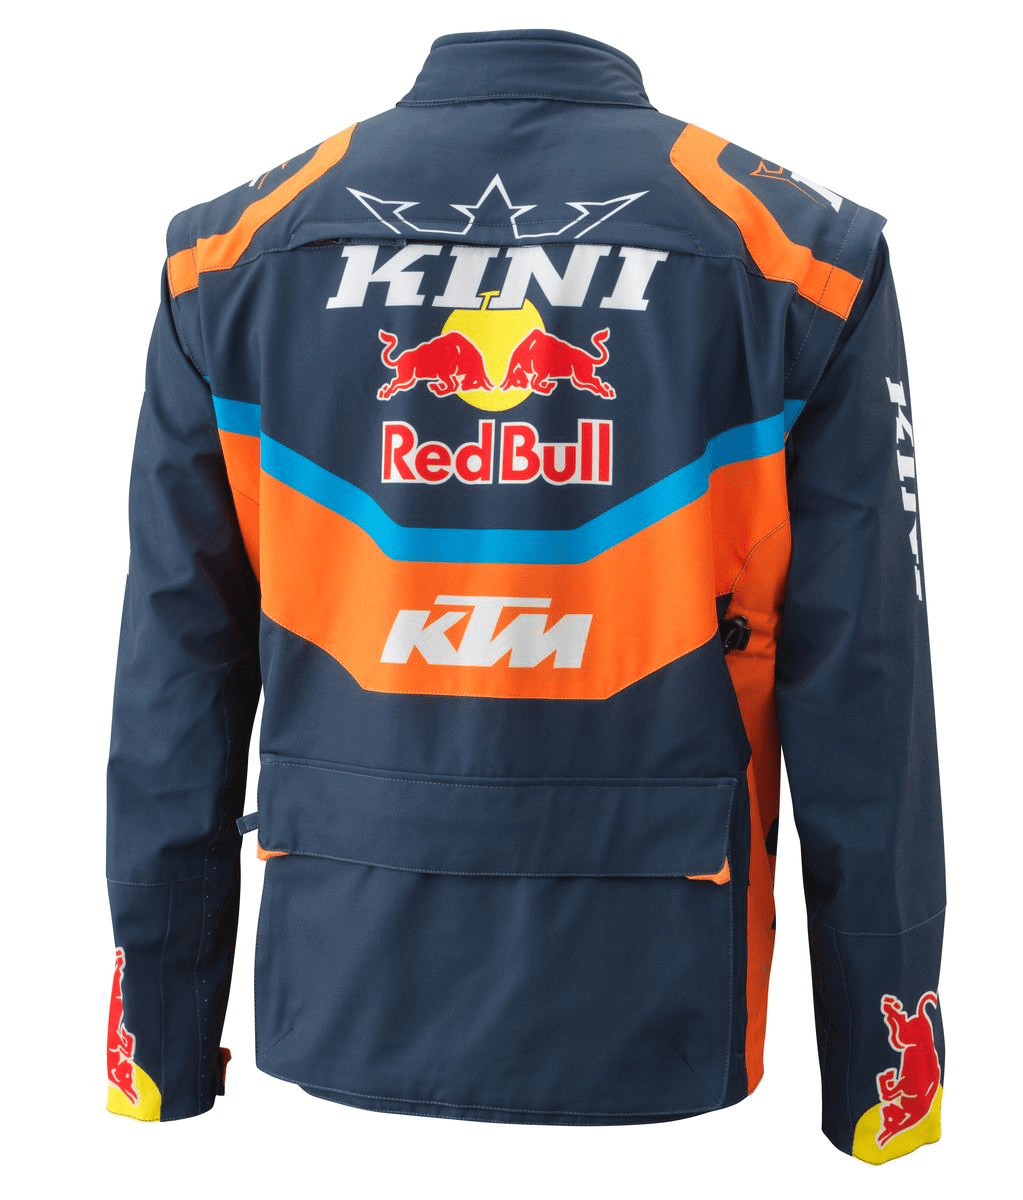 Kini-Rb Competition Jacket - KTM 3KI23004280X | Tienda Oficial & GASGAS España